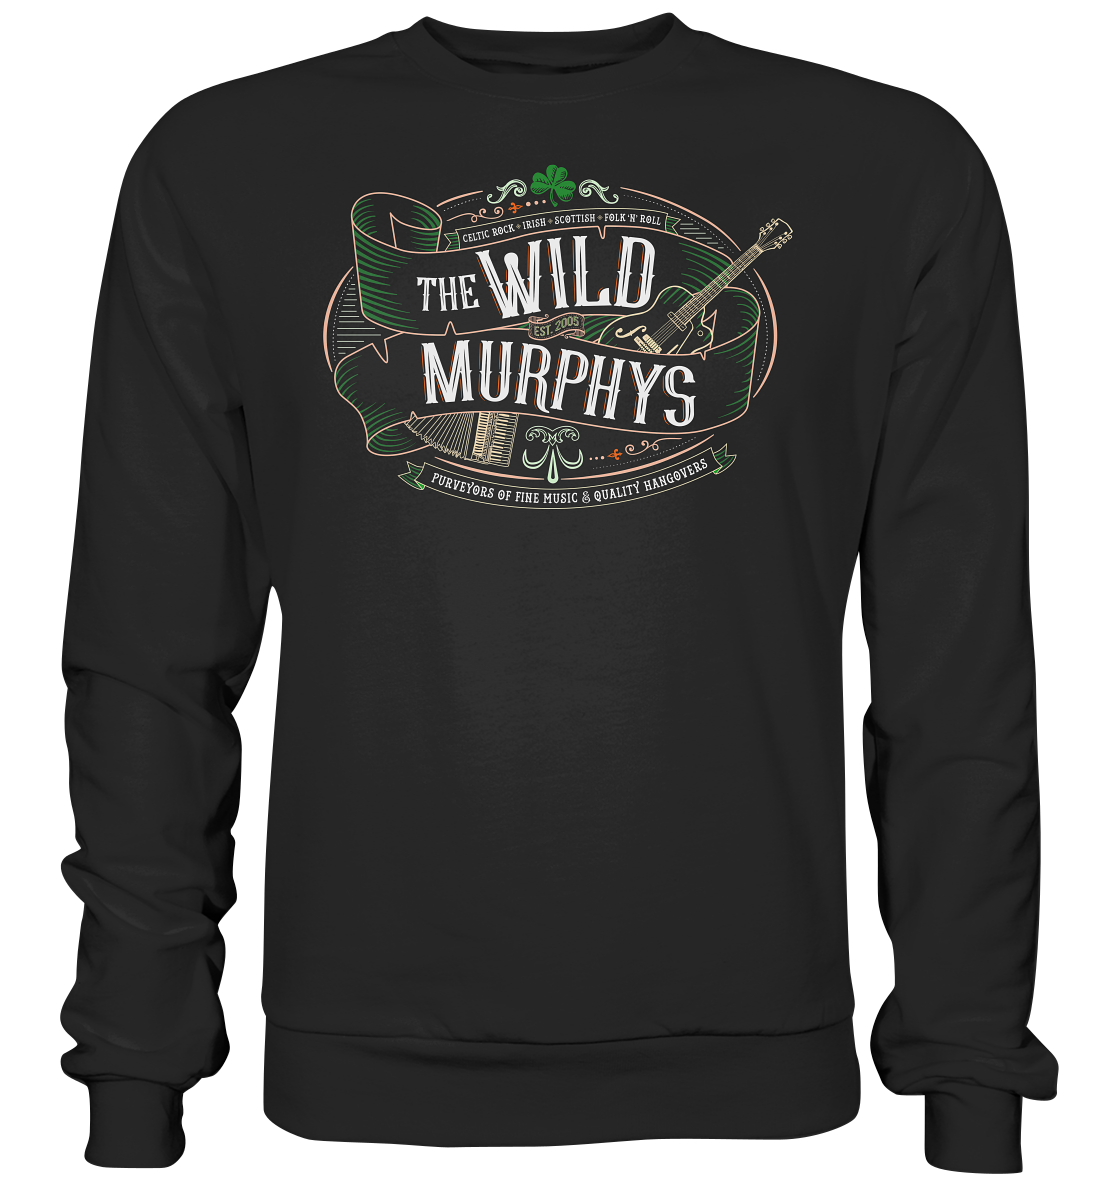 The Wild Murphys "Logo" - Premium Sweatshirt